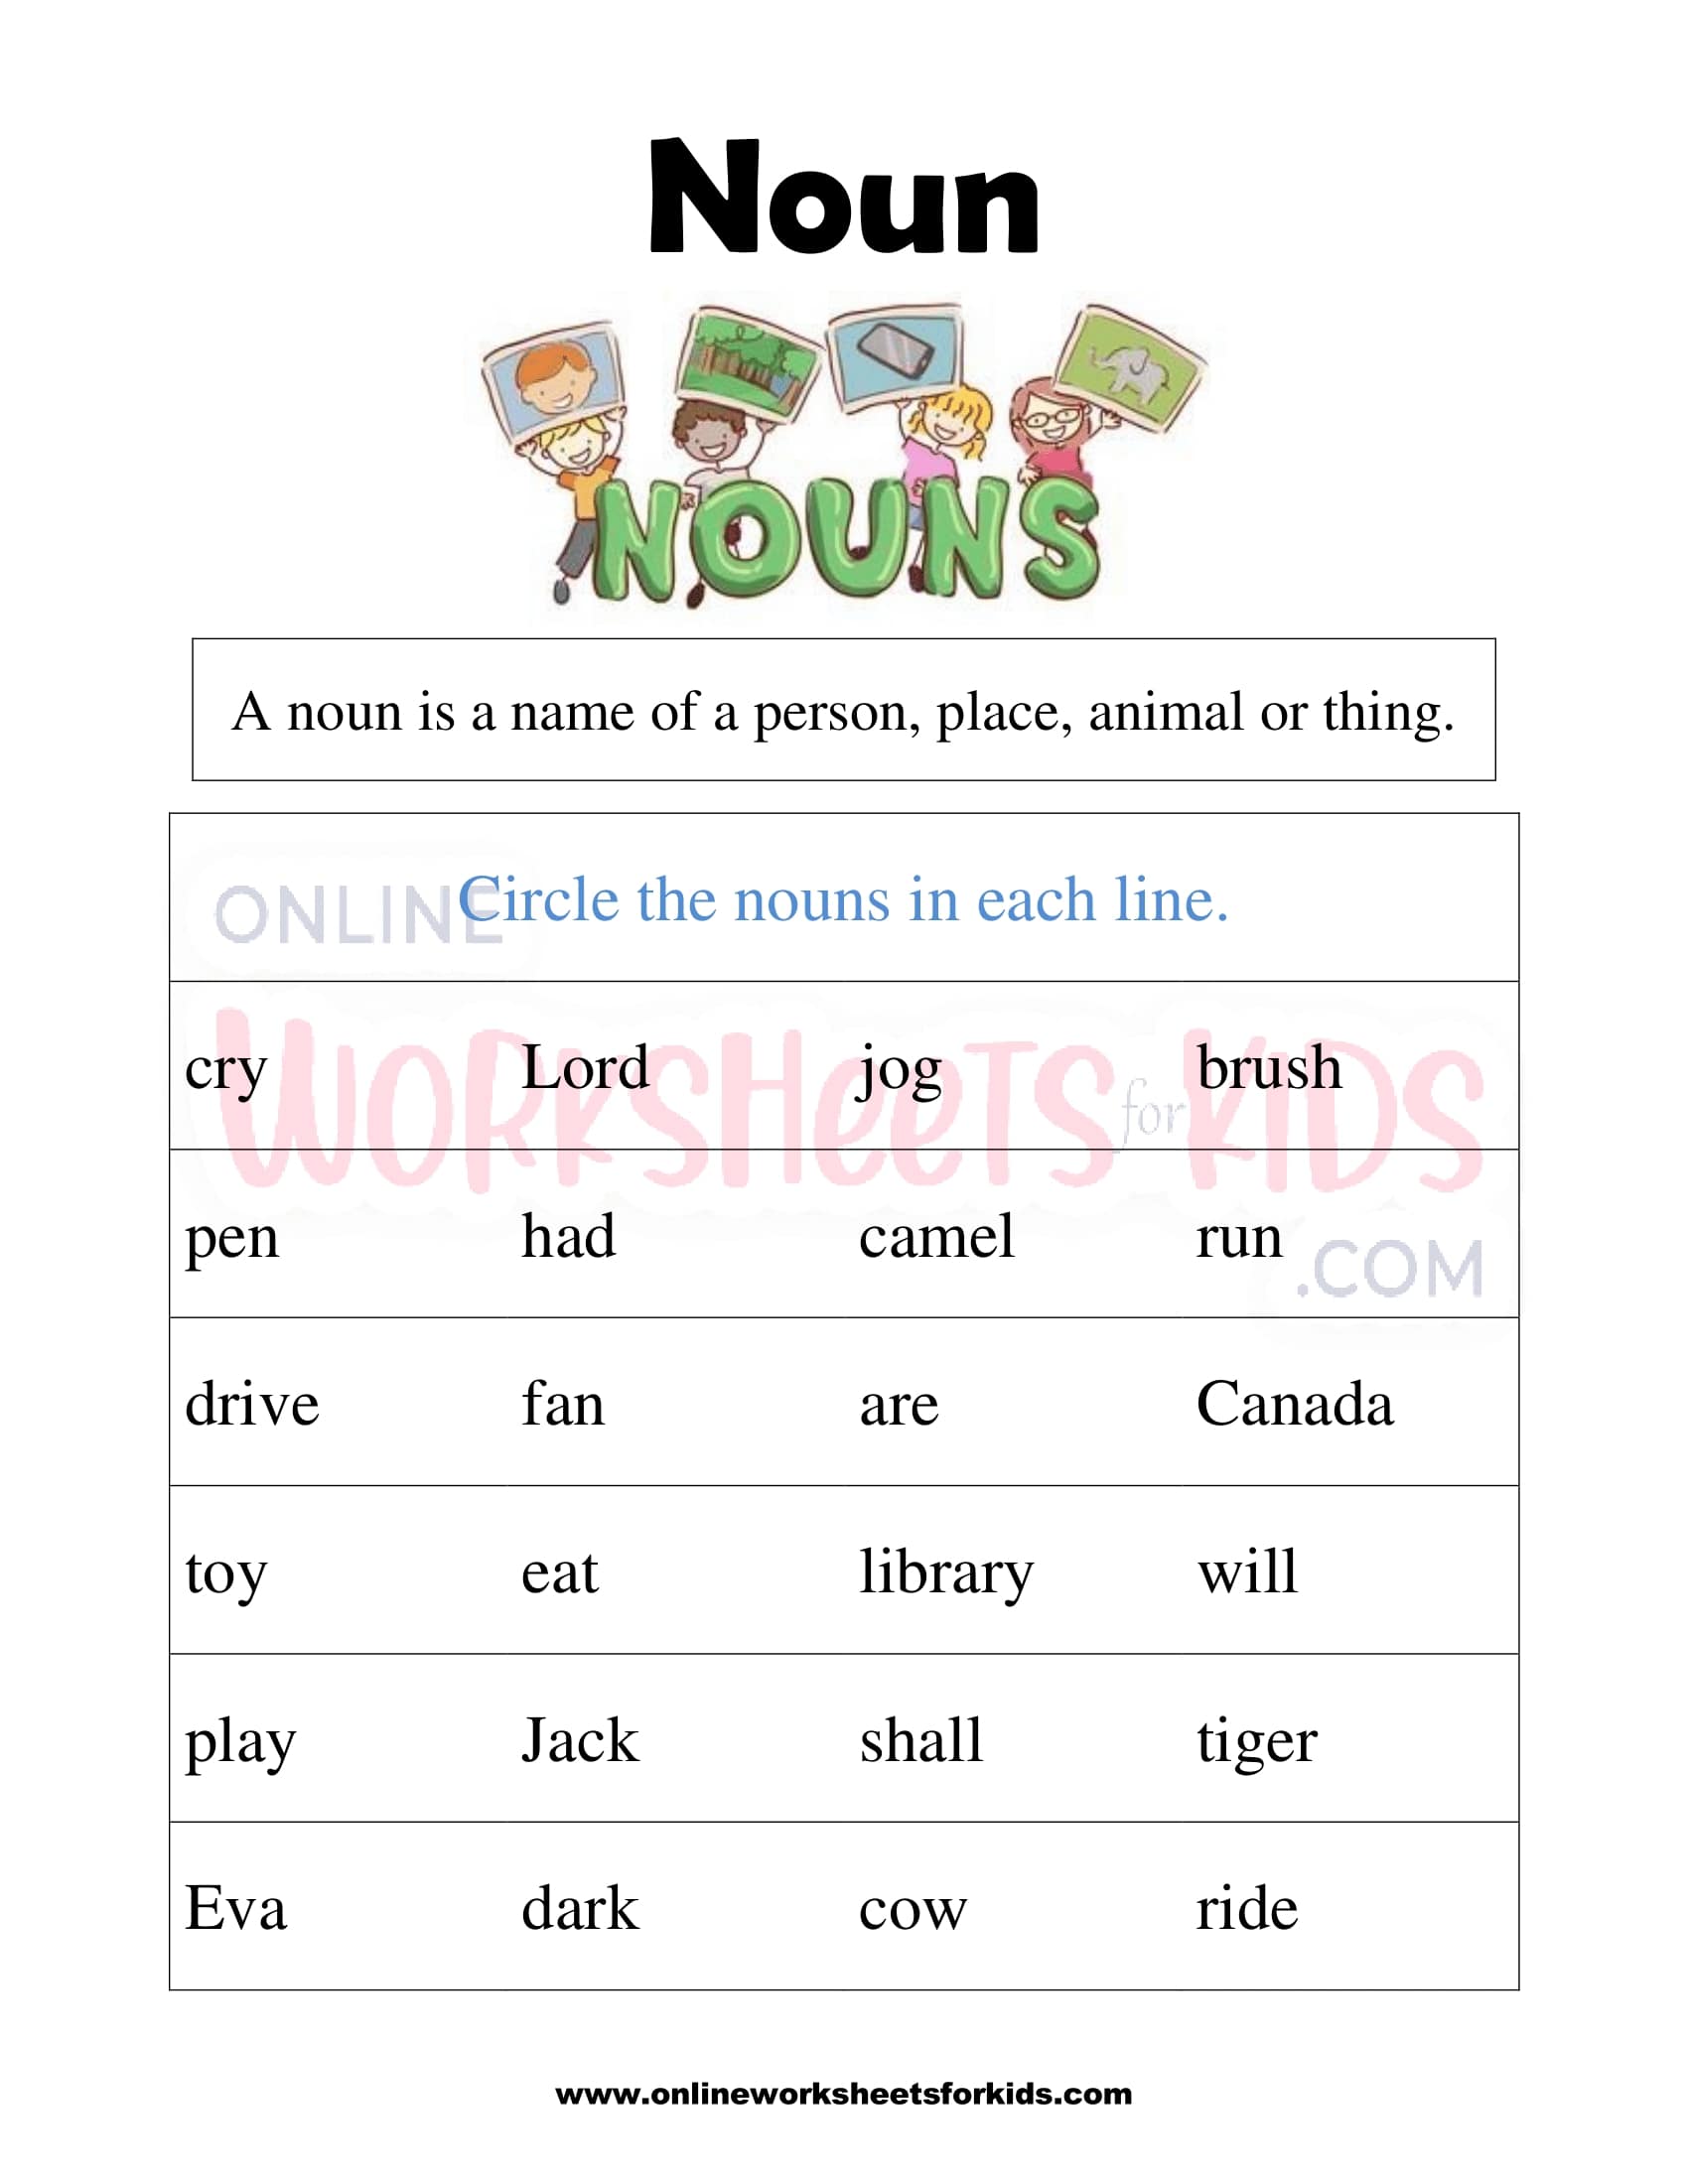 noun-worksheets-for-grade-1-7